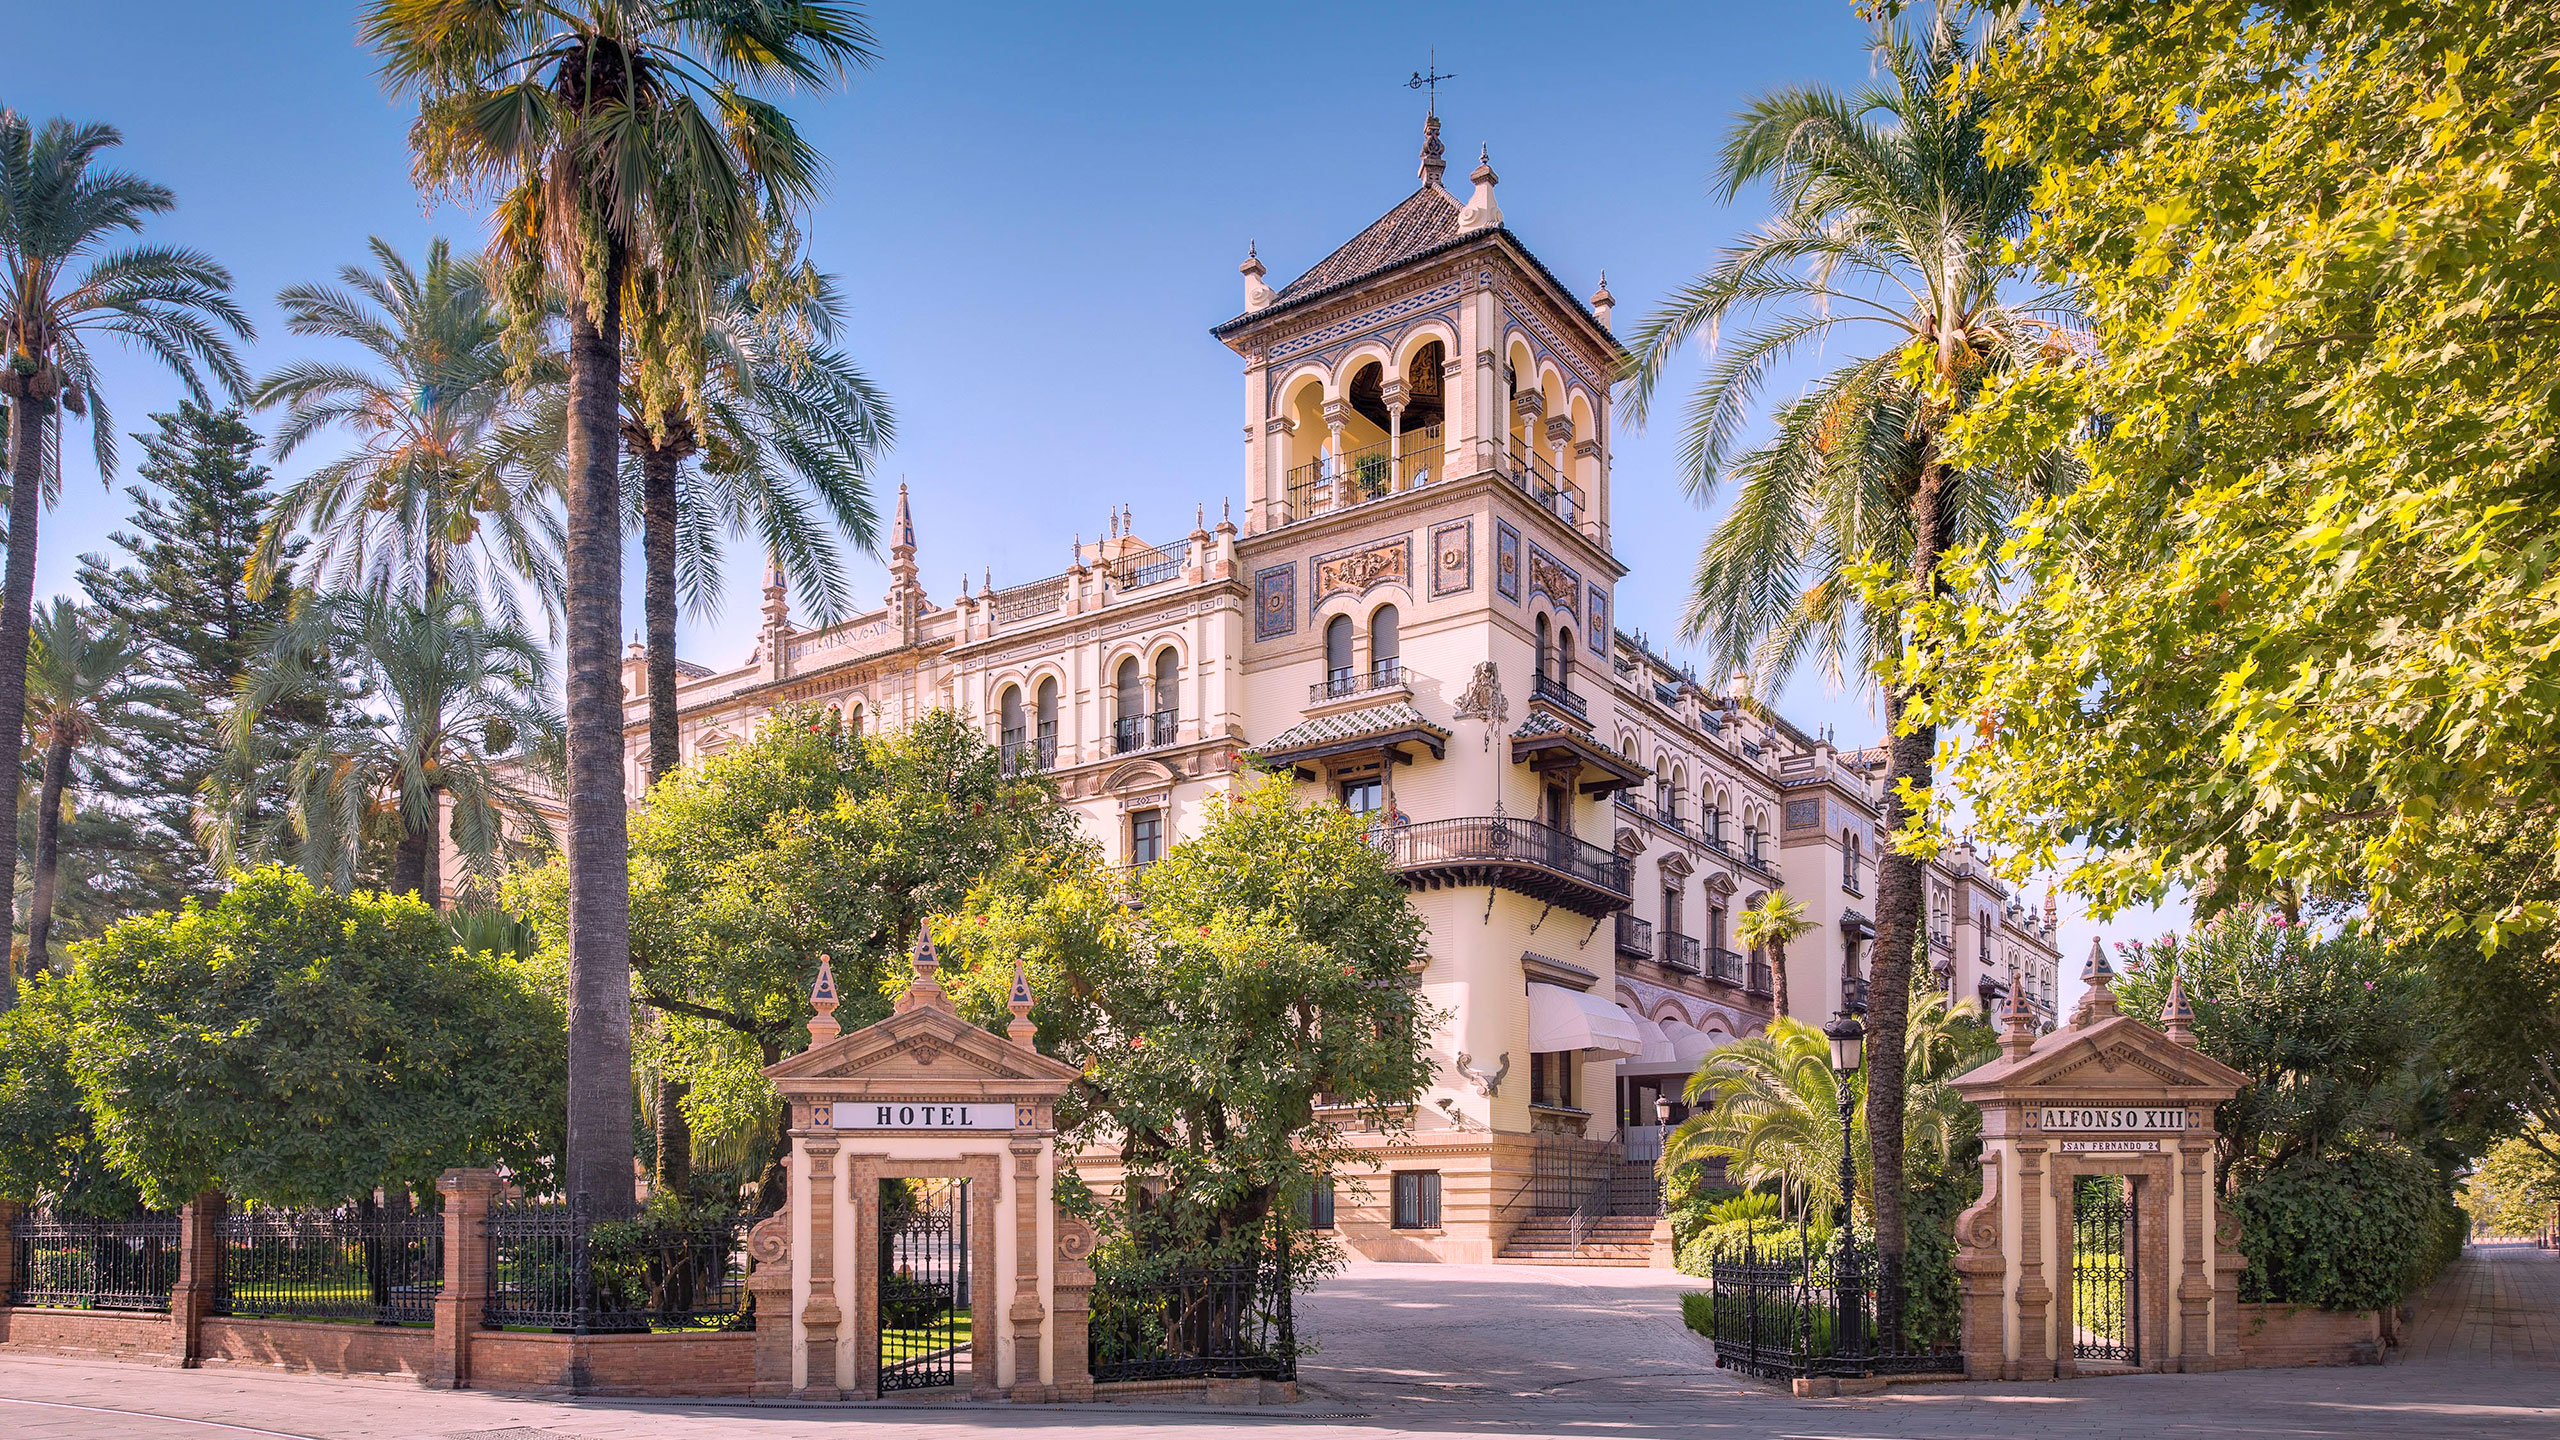 Hôtels du monde : Hôtel Alfonso XIII, Séville, Espagne